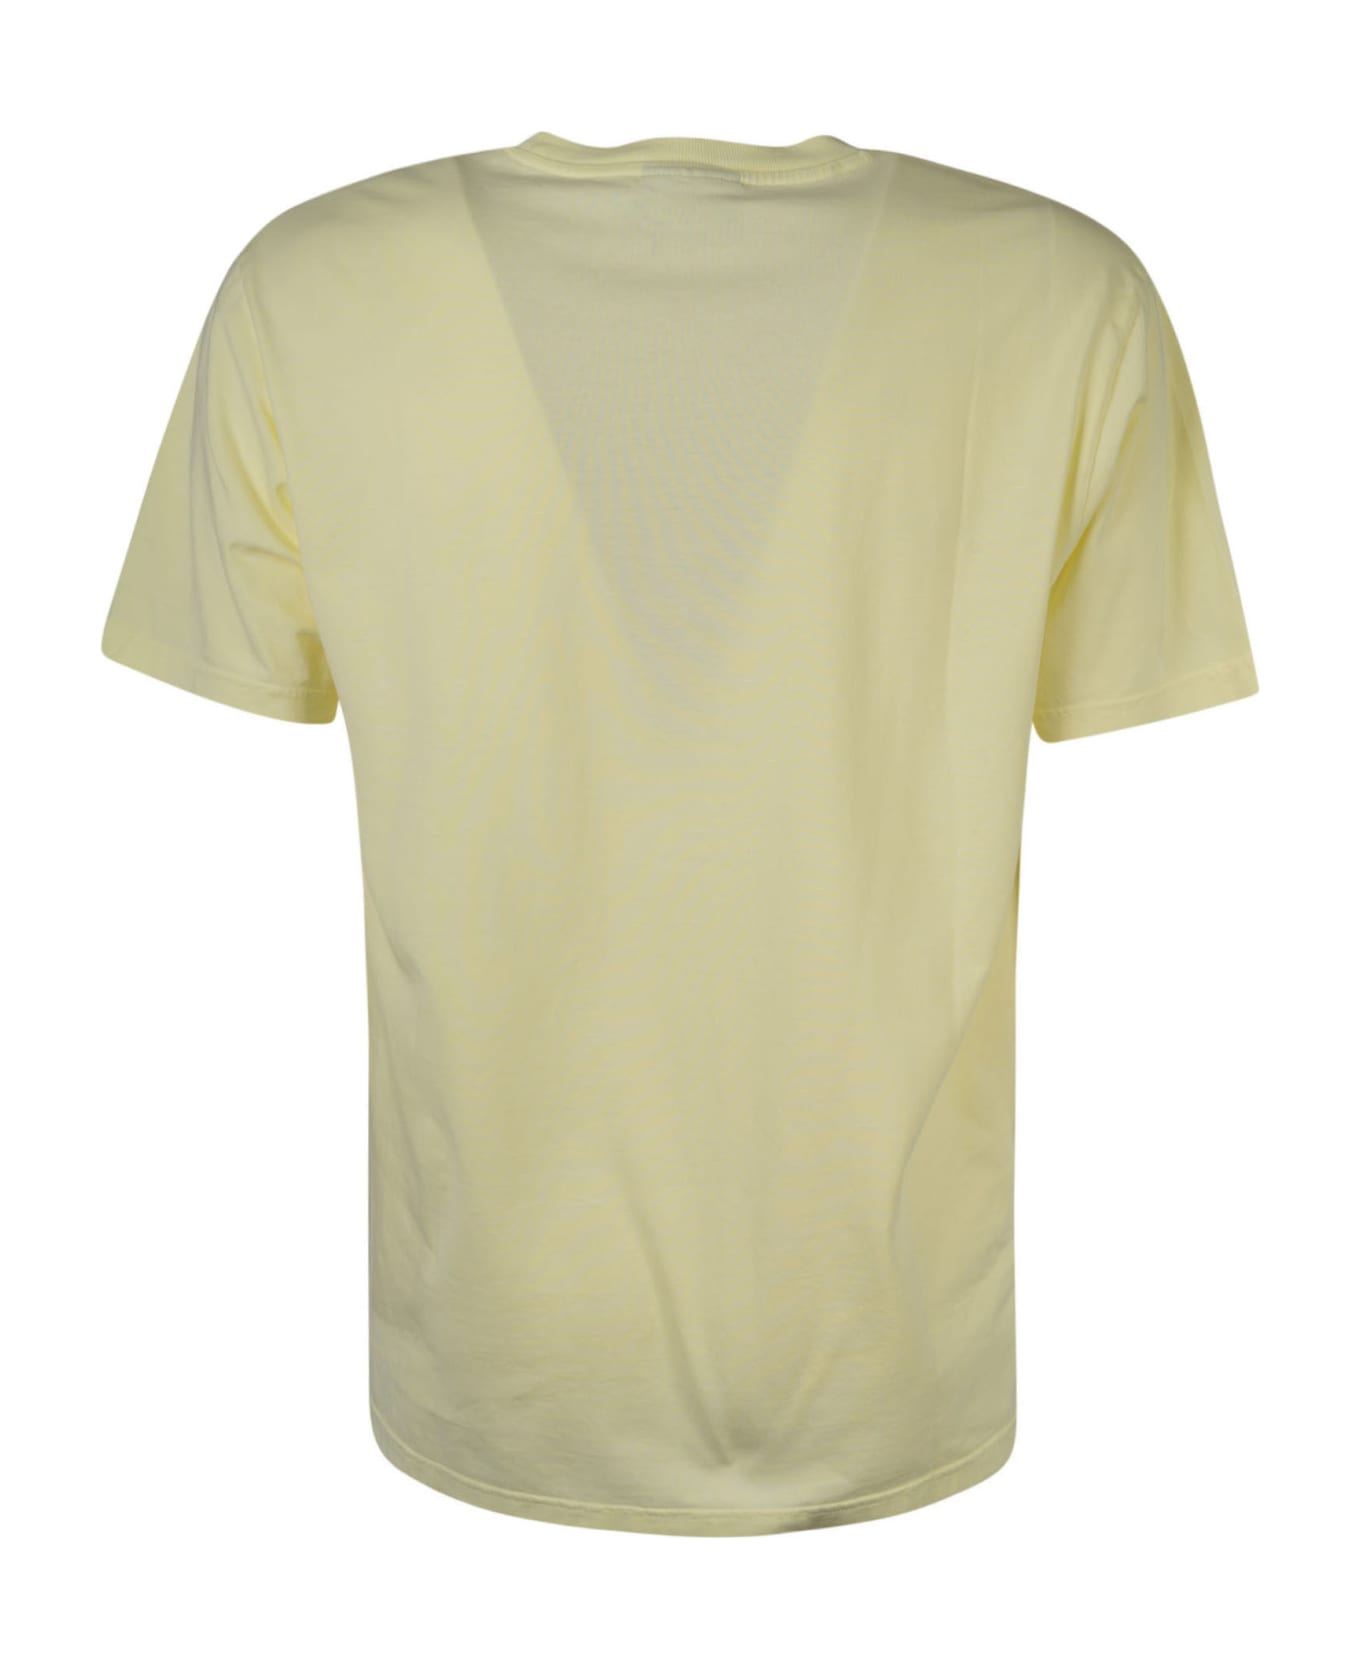 Bluemarble Logo Printed T-shirt - Tender Yellow